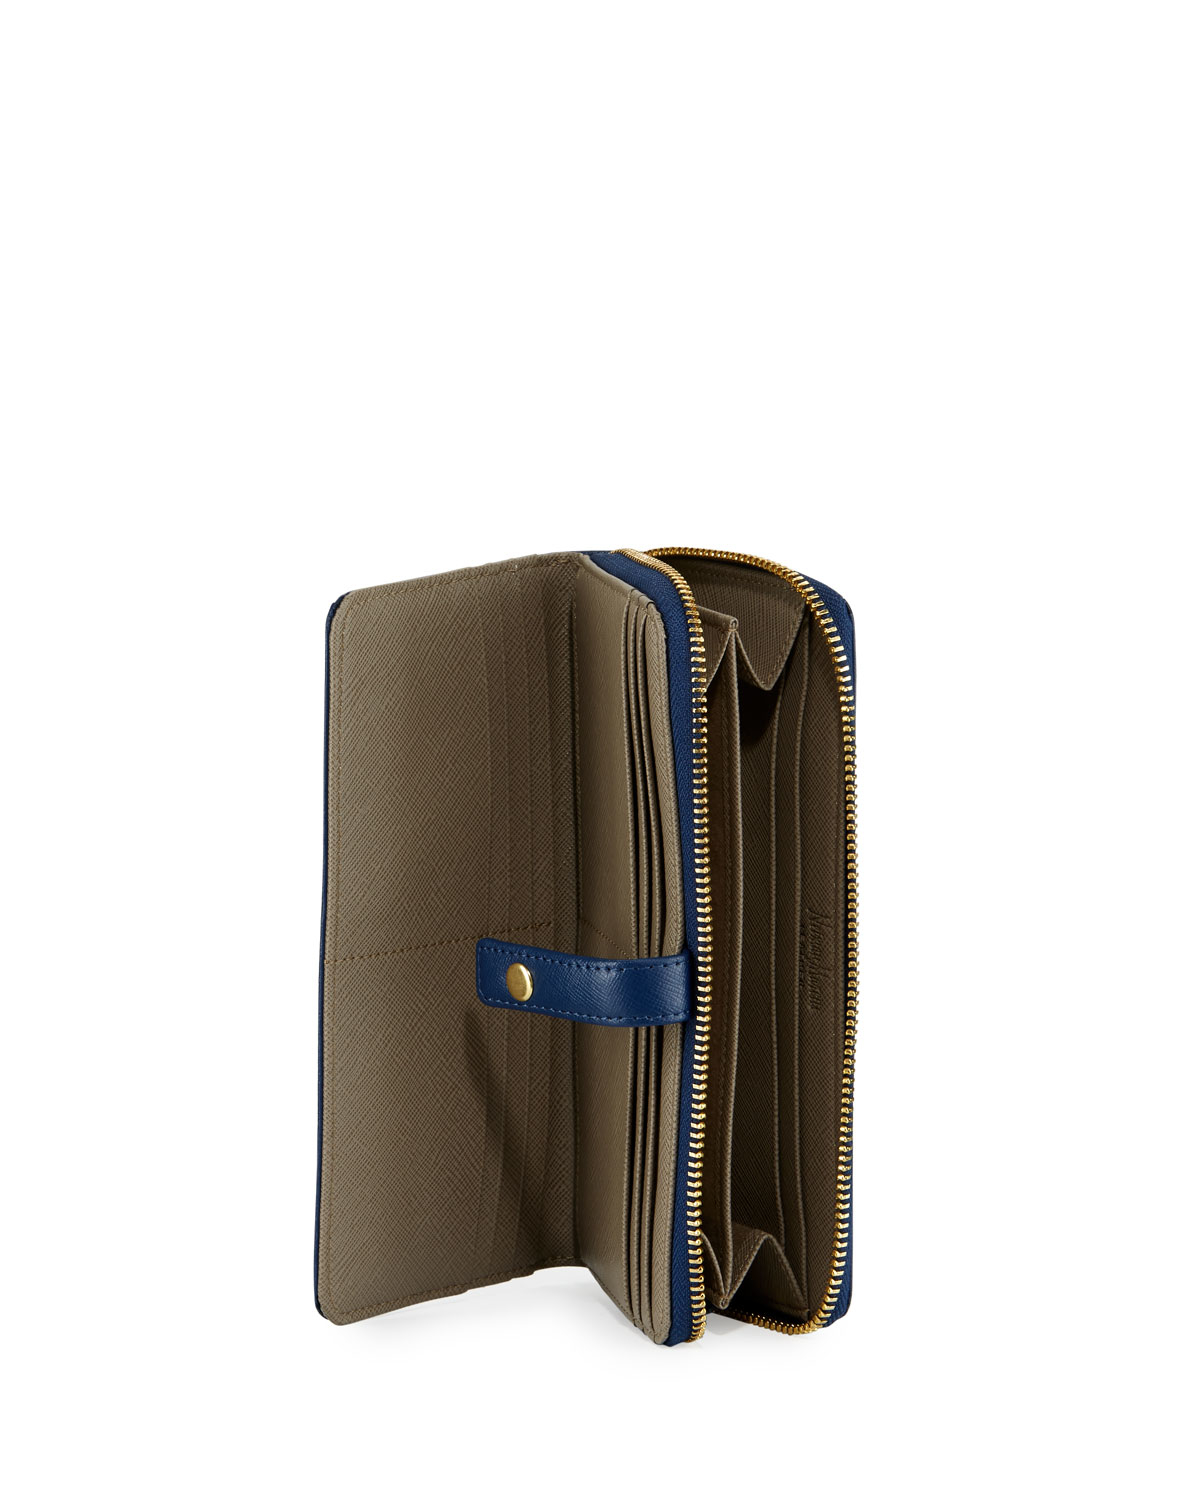 Lyst - Neiman Marcus Leather Tab Zip Wallet in Blue